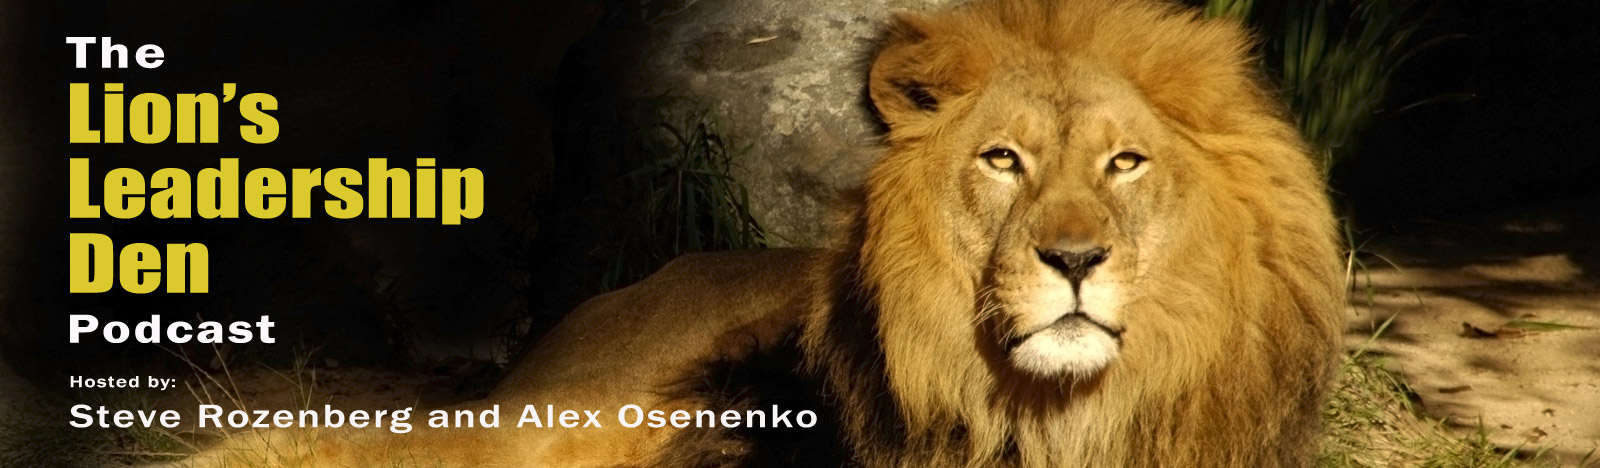 Lions Leadership Den Podcast